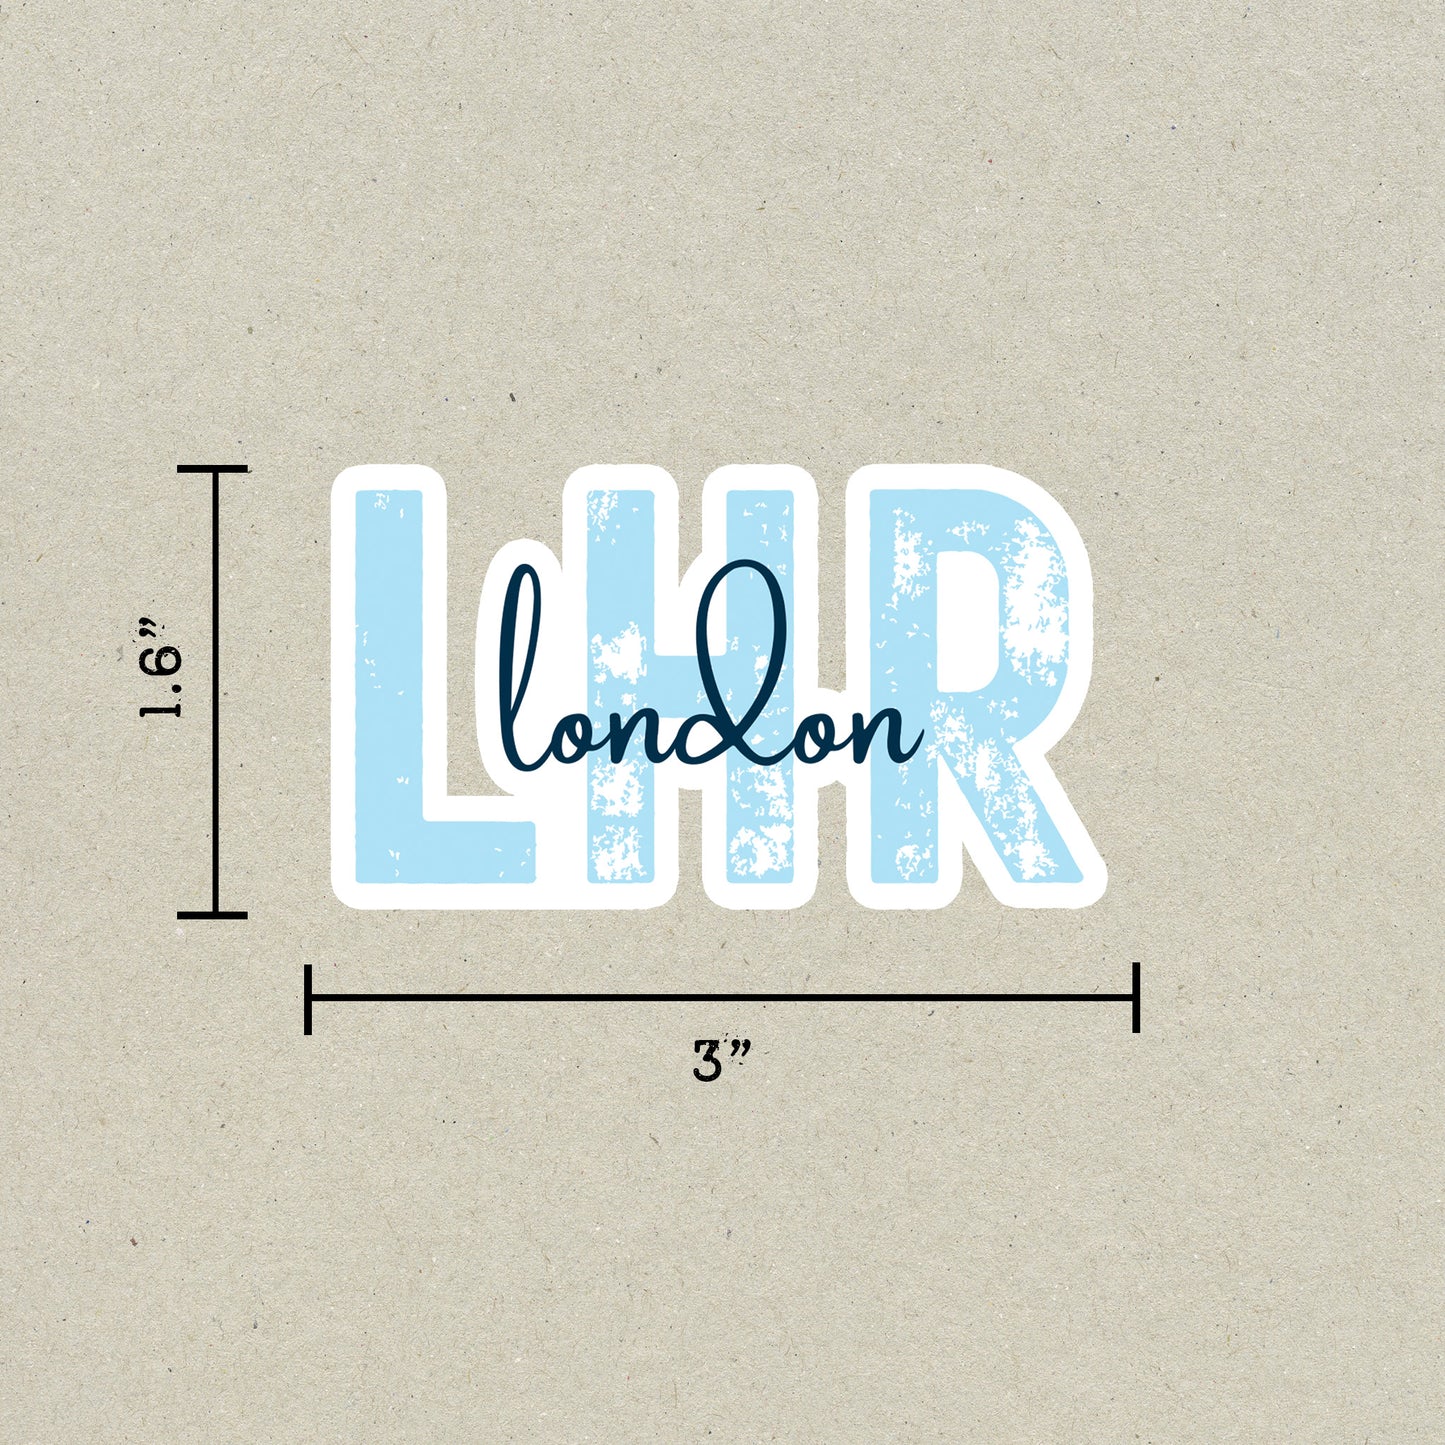 LHR London Airport Code Sticker